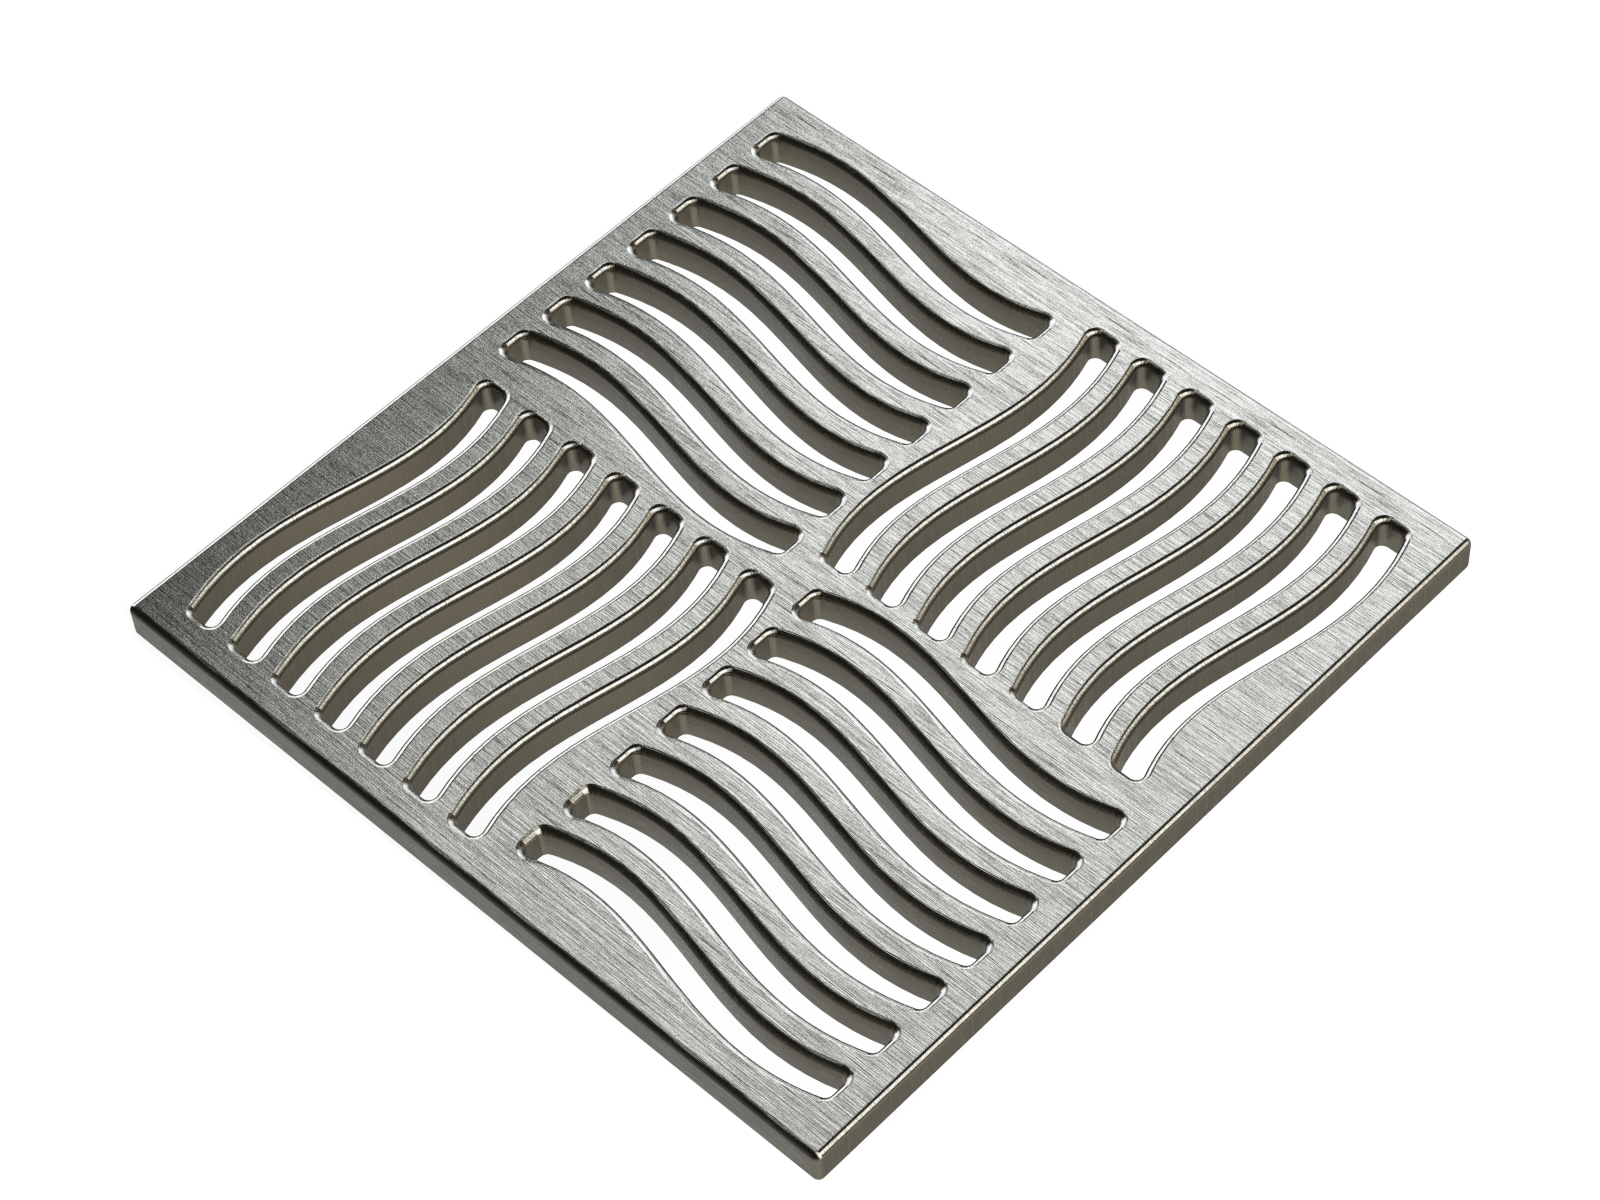 Pro GEN II Grate Cover, Designer Series Swirl Pattern, Brushed Stainless Steel